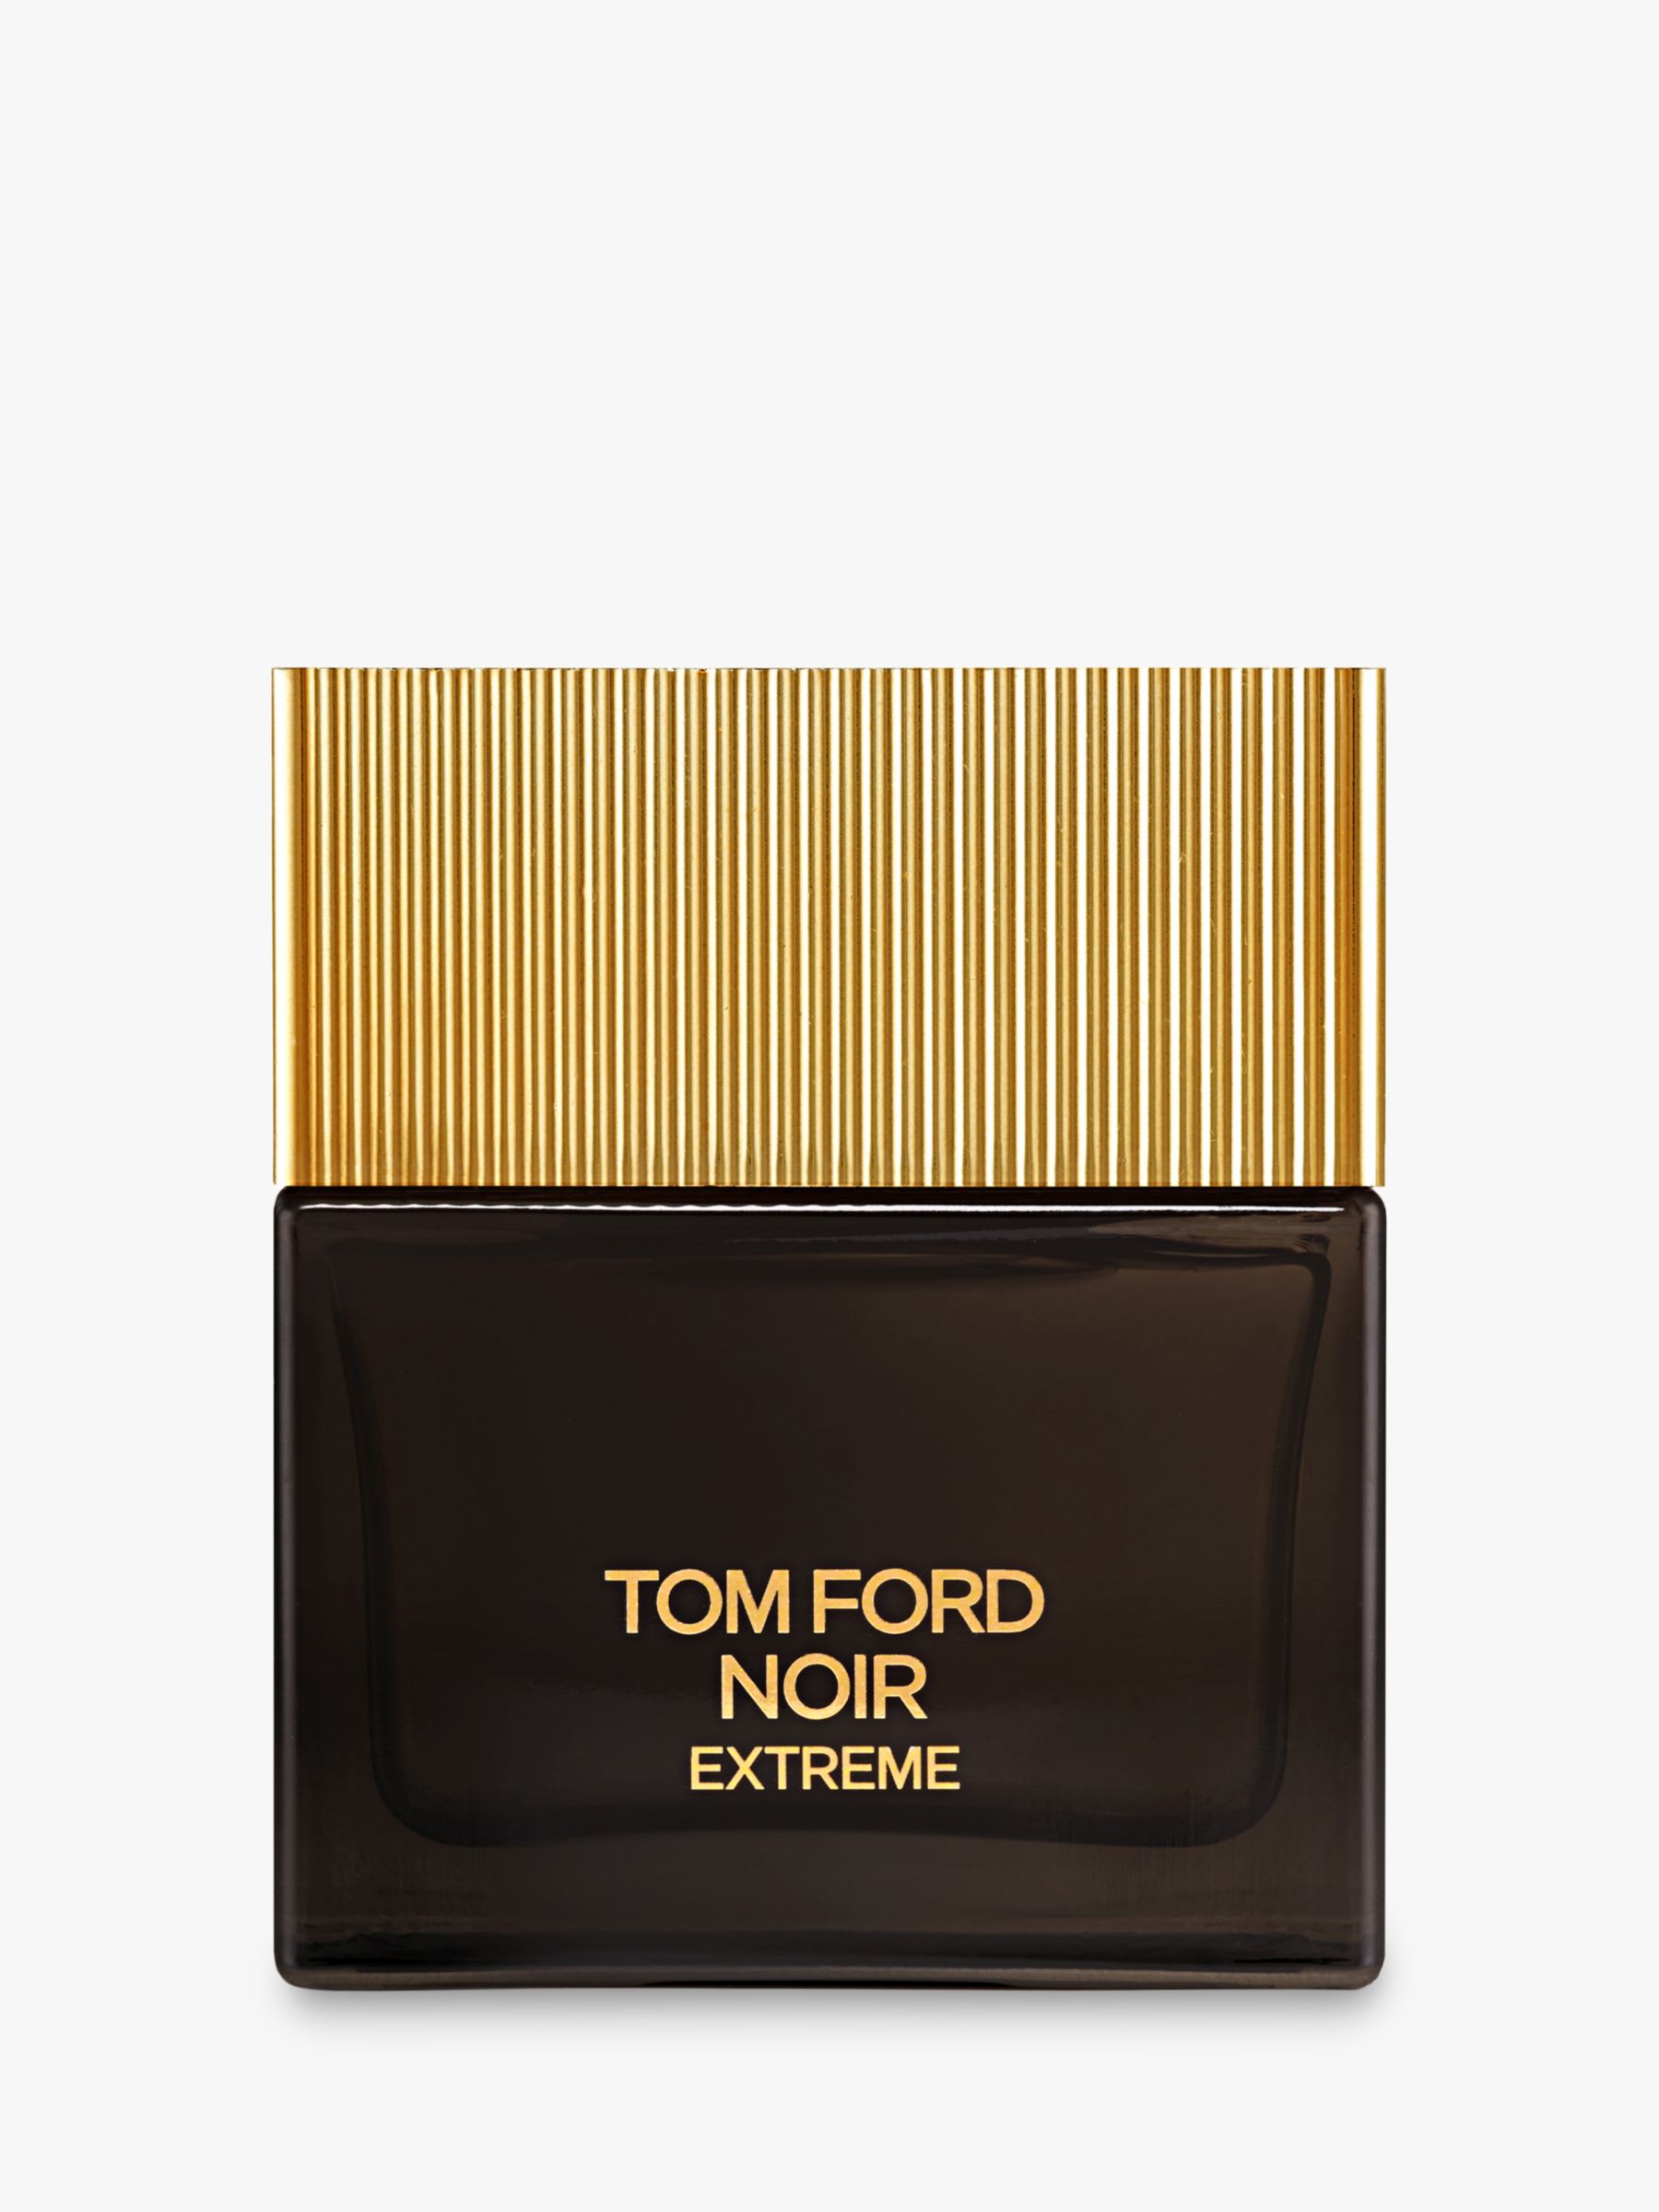 TOM FORD Noir Extreme, 50ml at John Lewis & Partners